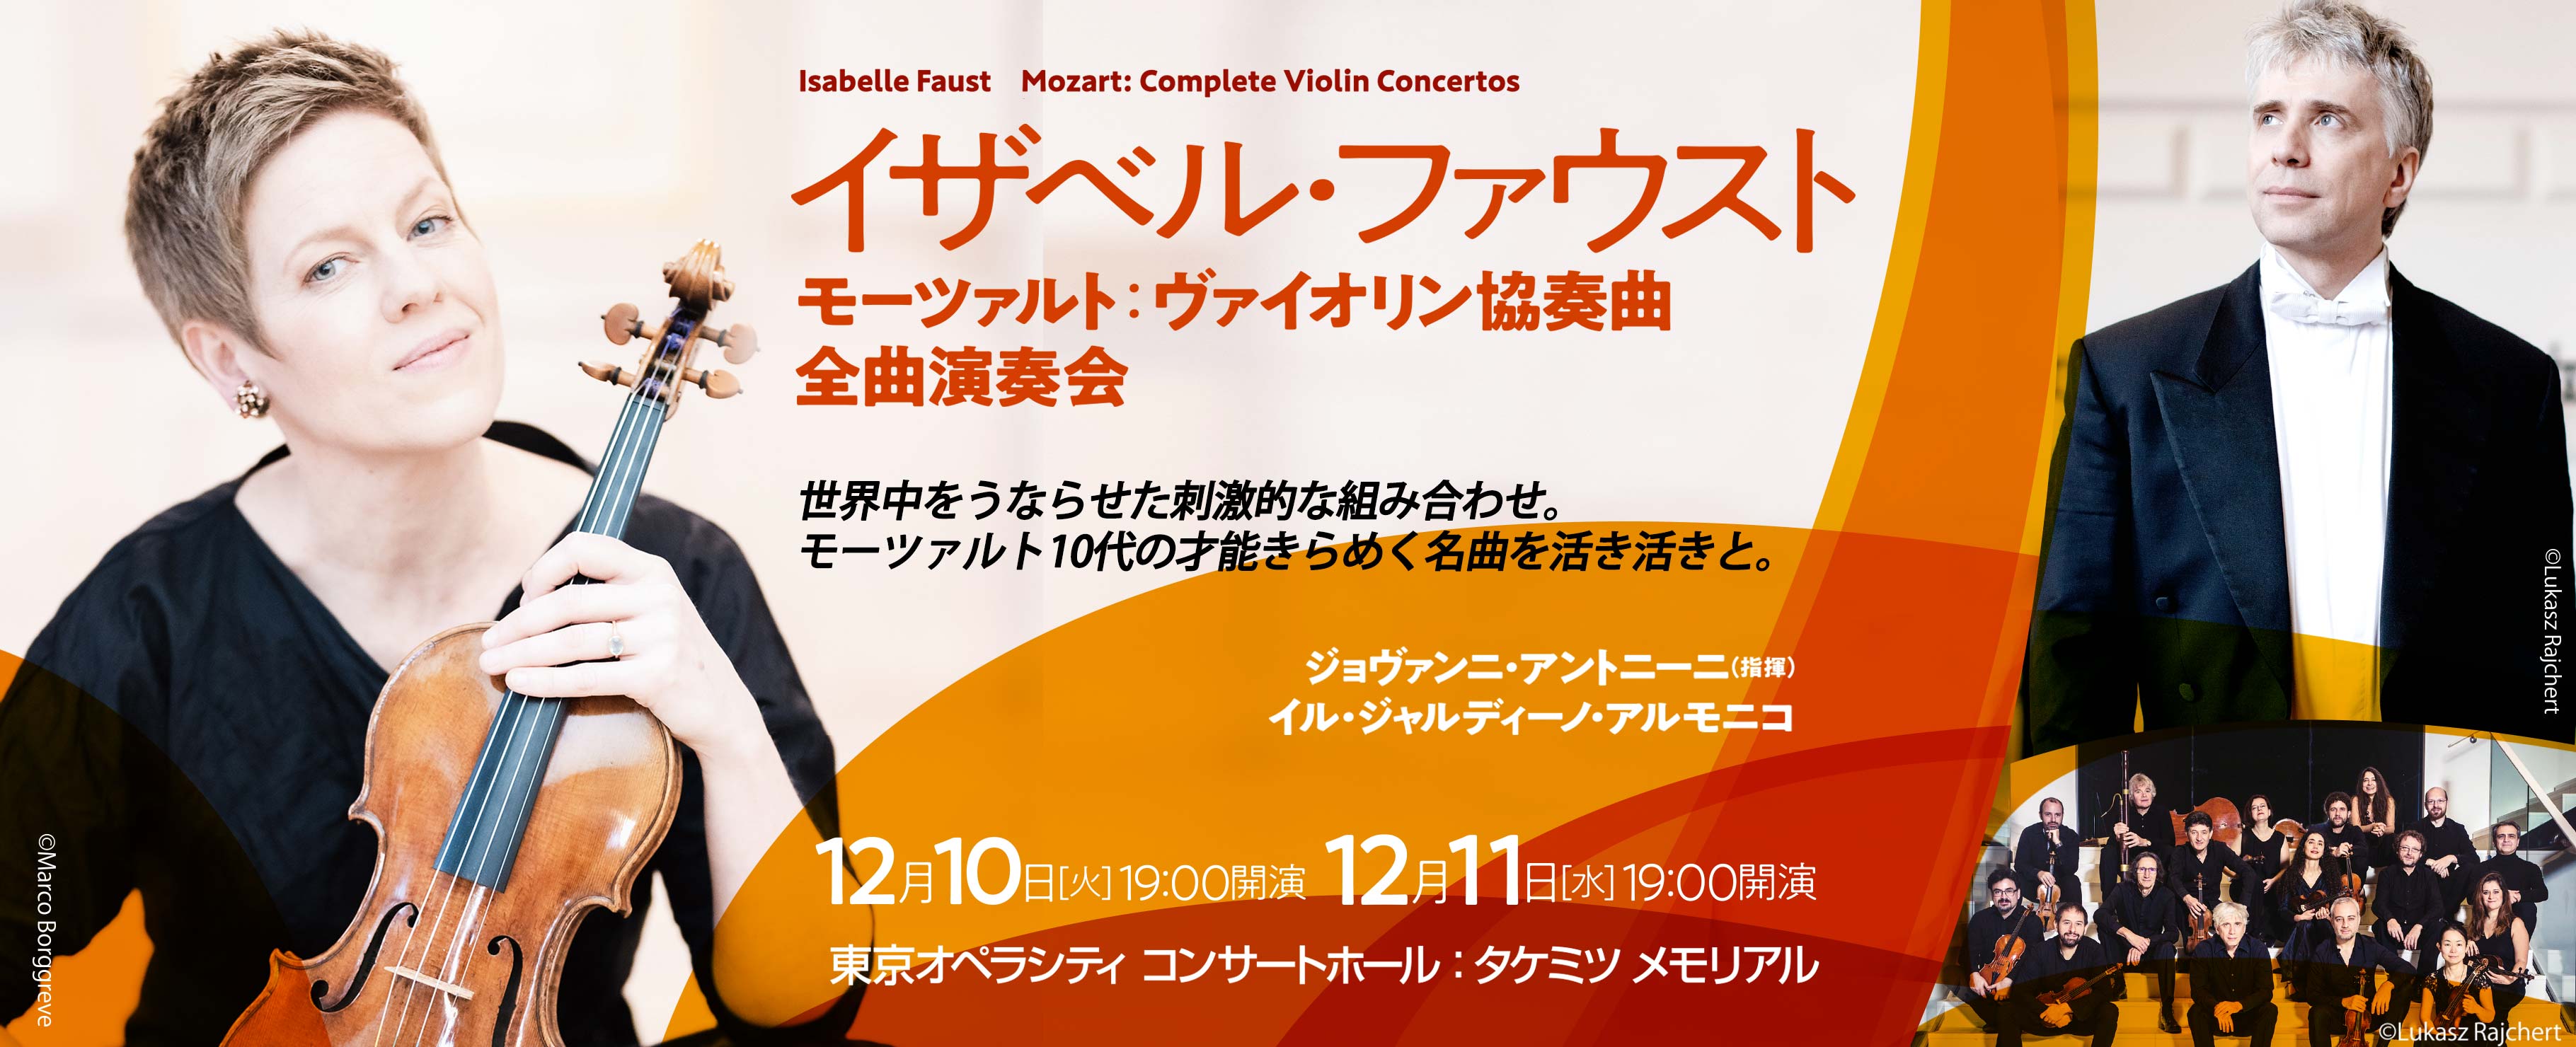 Isabelle Faust
Mozart: Complete Violin Concertos